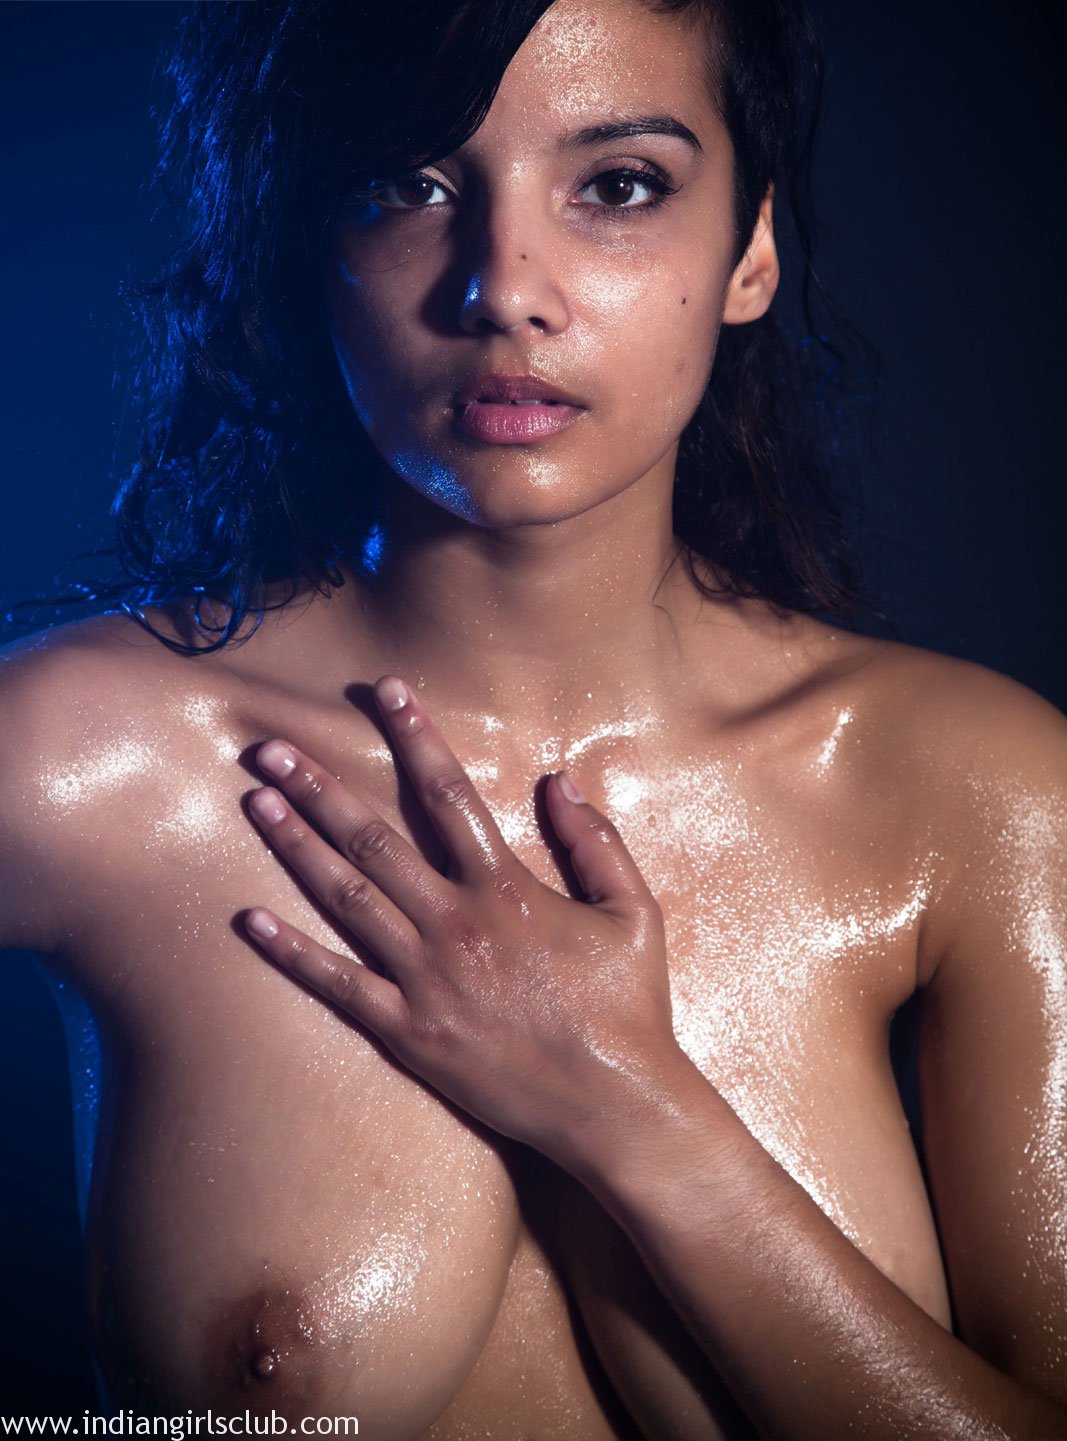 1067px x 1441px - Indian Girls Sex Hidden Videos Pics Photos - Crpmb